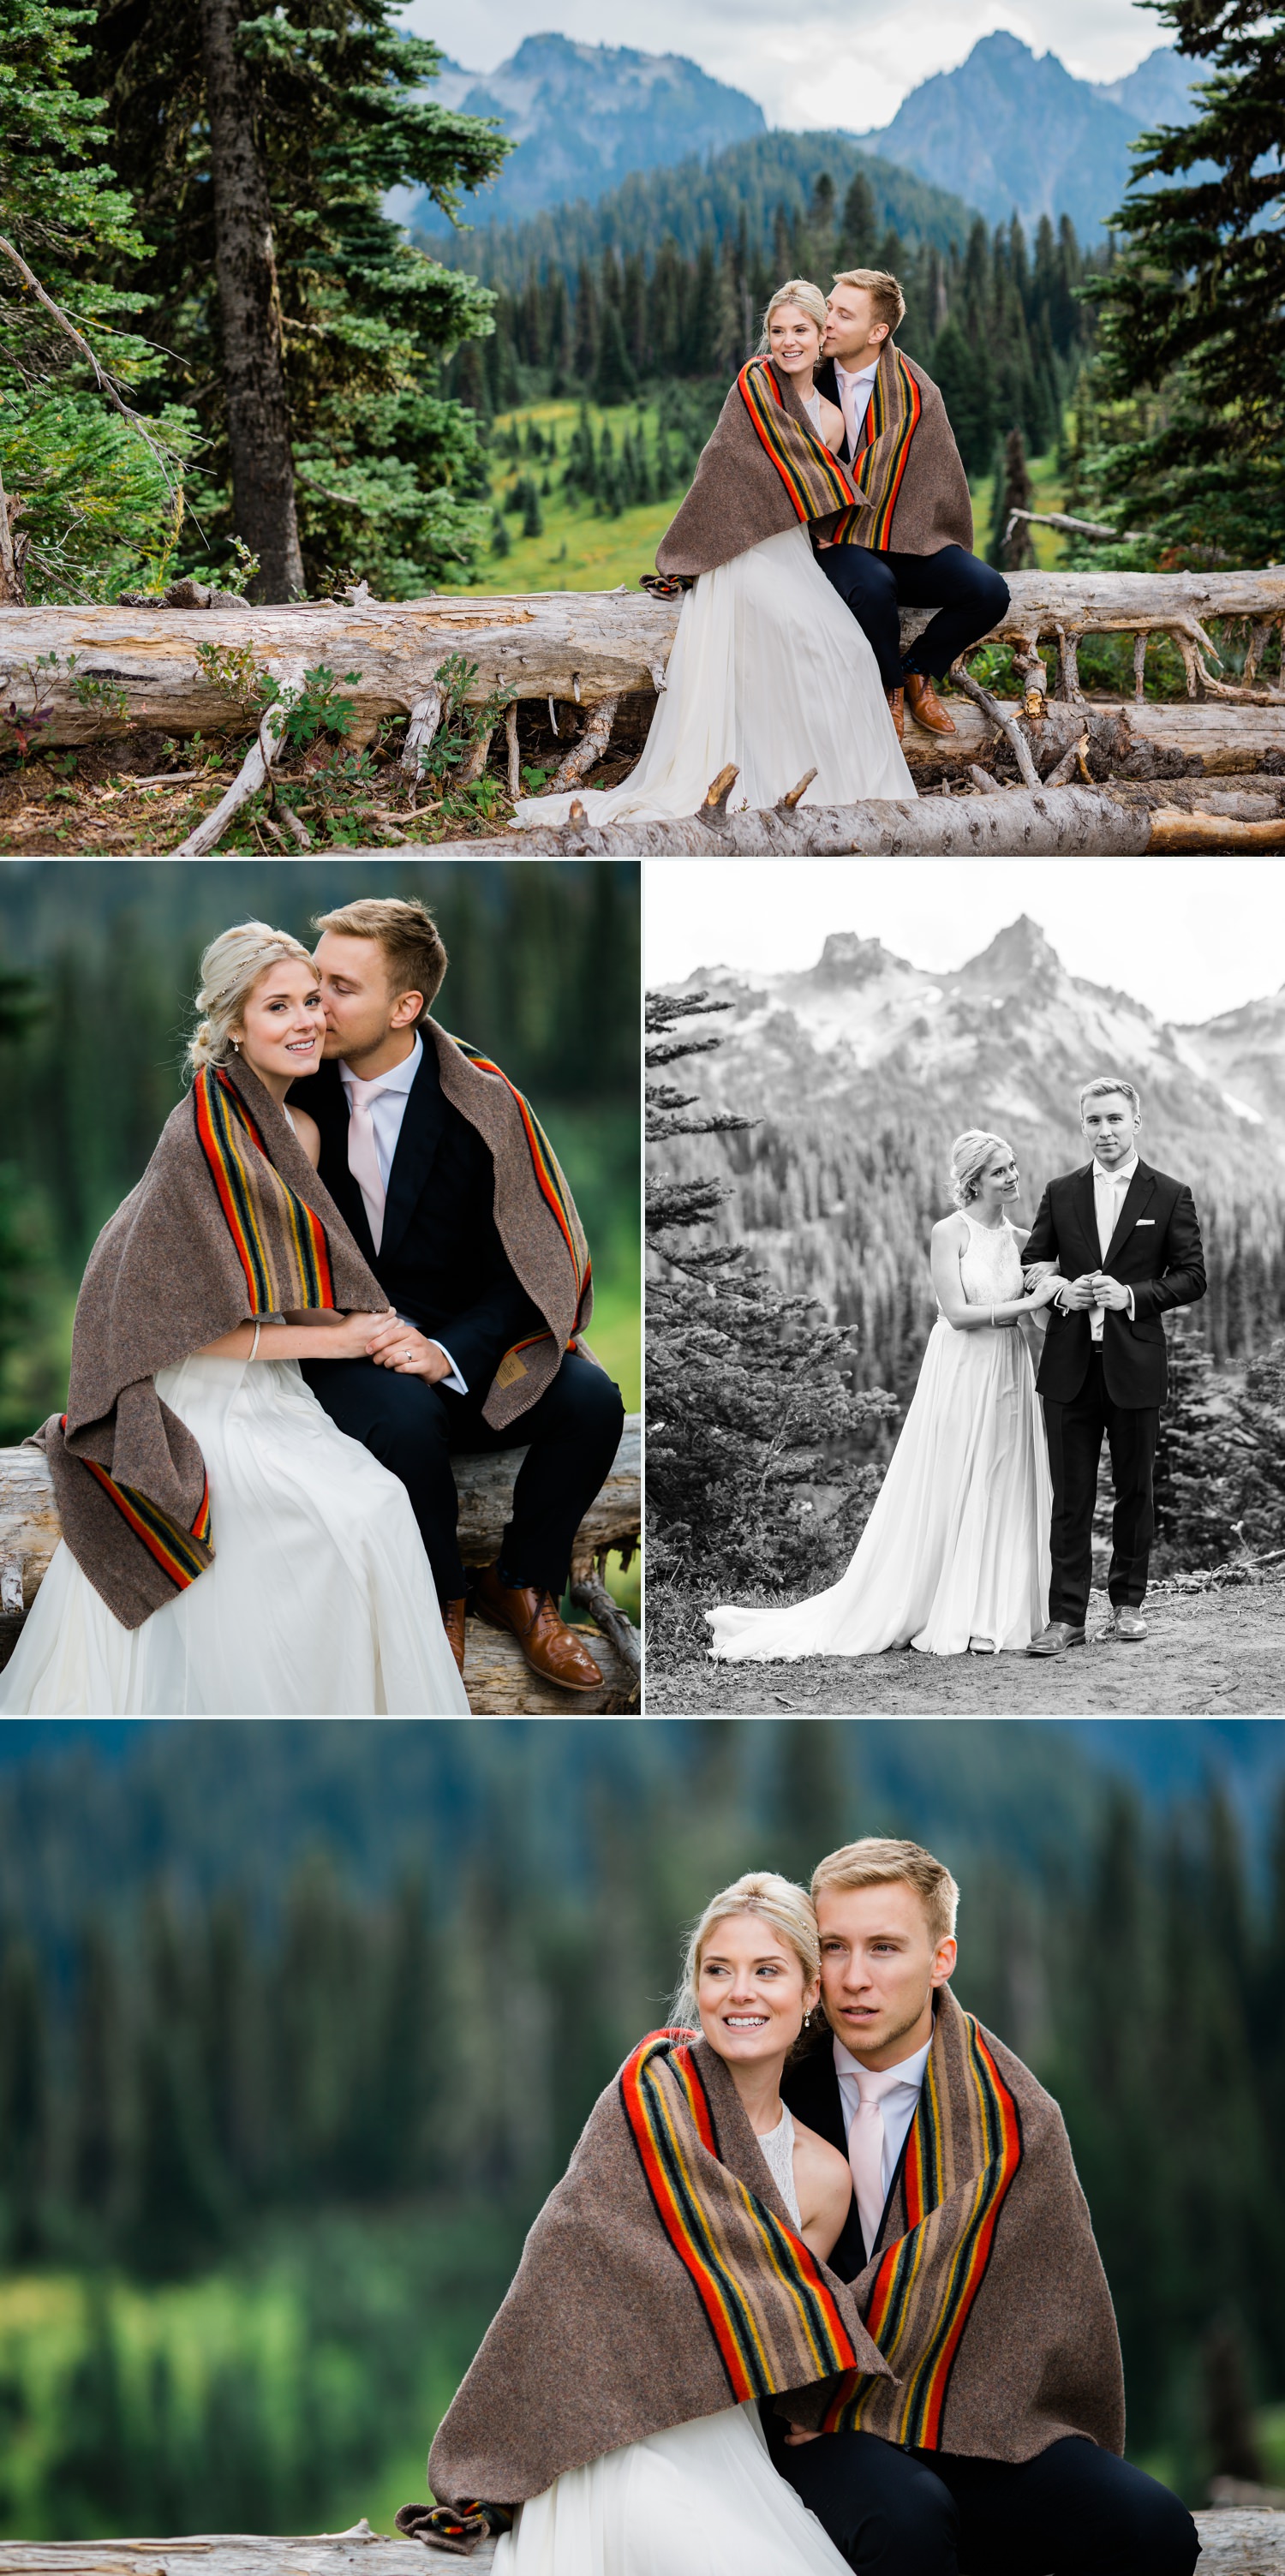 cozy wedding portrait photography at mount rainier national park